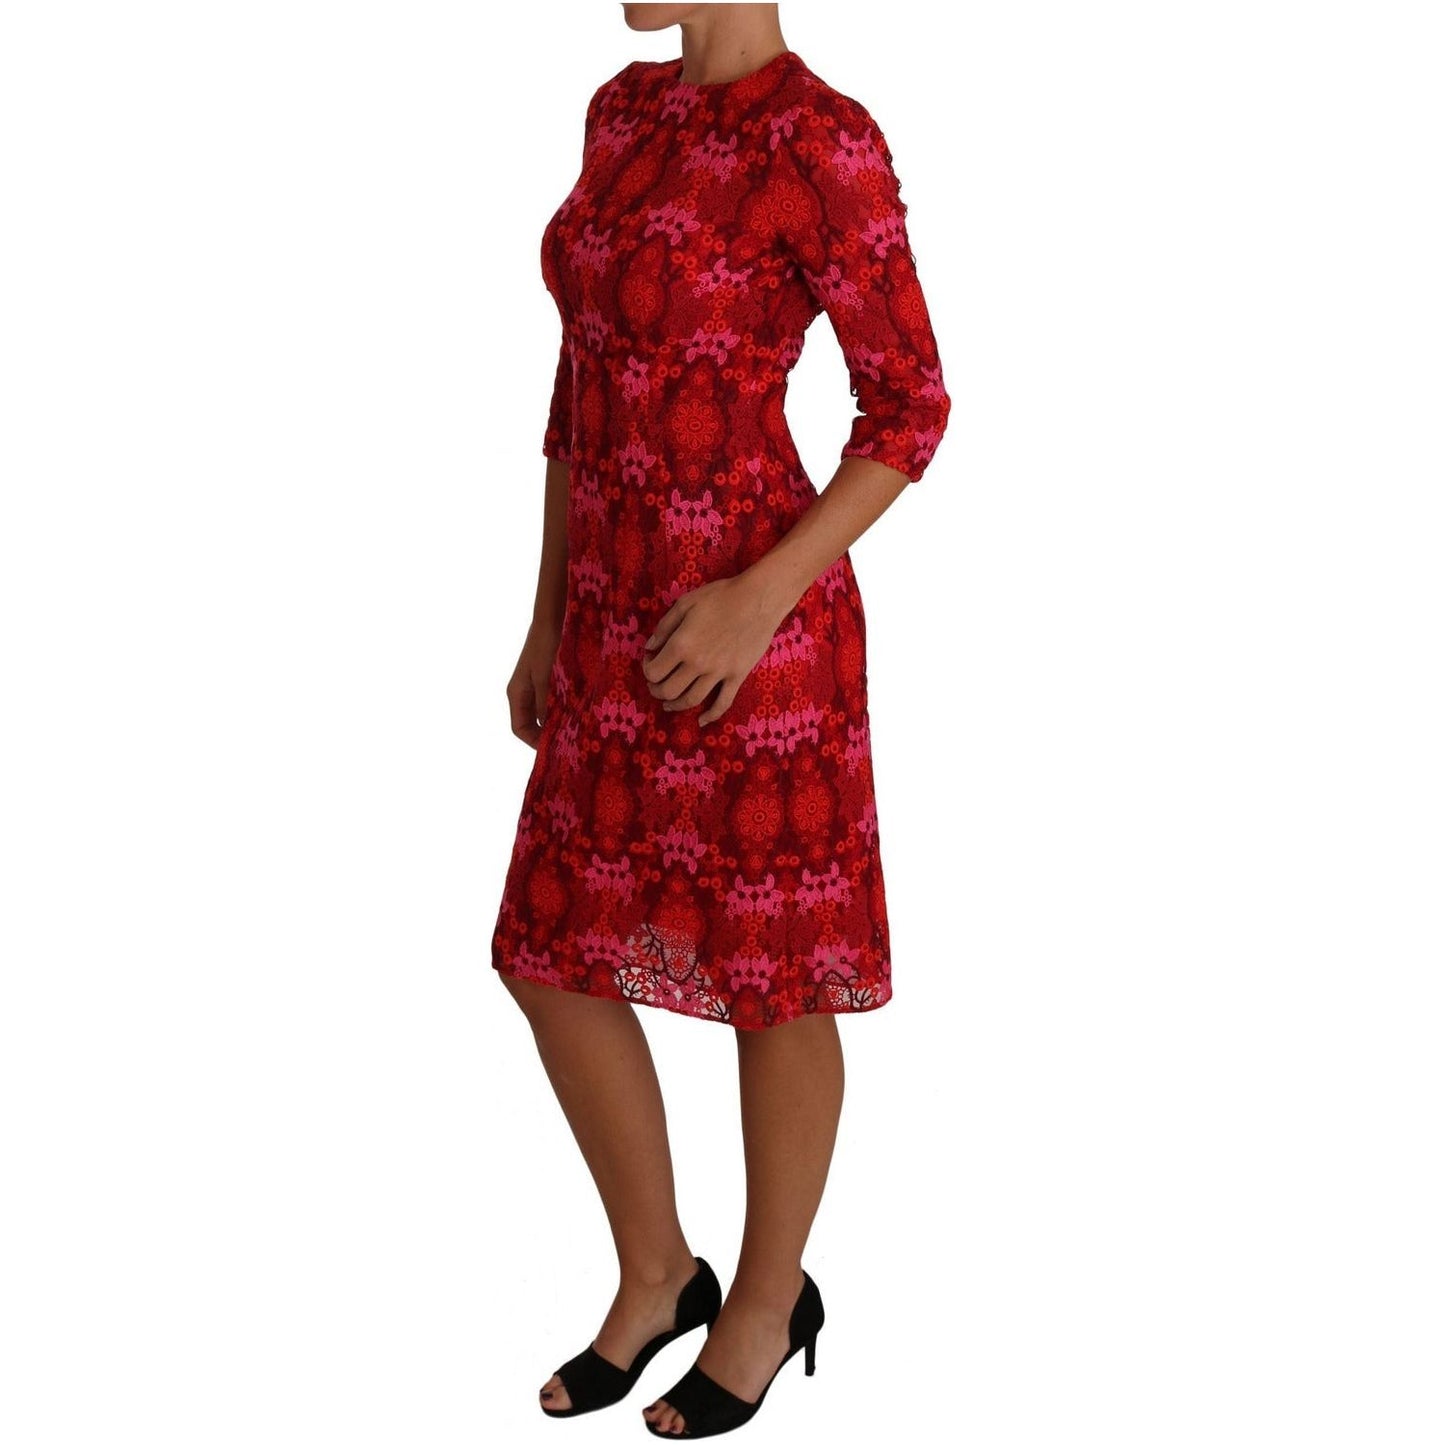 Dolce & Gabbana Elegant Floral Crochet Knee-Length Dress floral-crochet-lace-red-pink-sheath-dress 635562-floral-crochet-lace-red-pink-sheath-dress-2.jpg